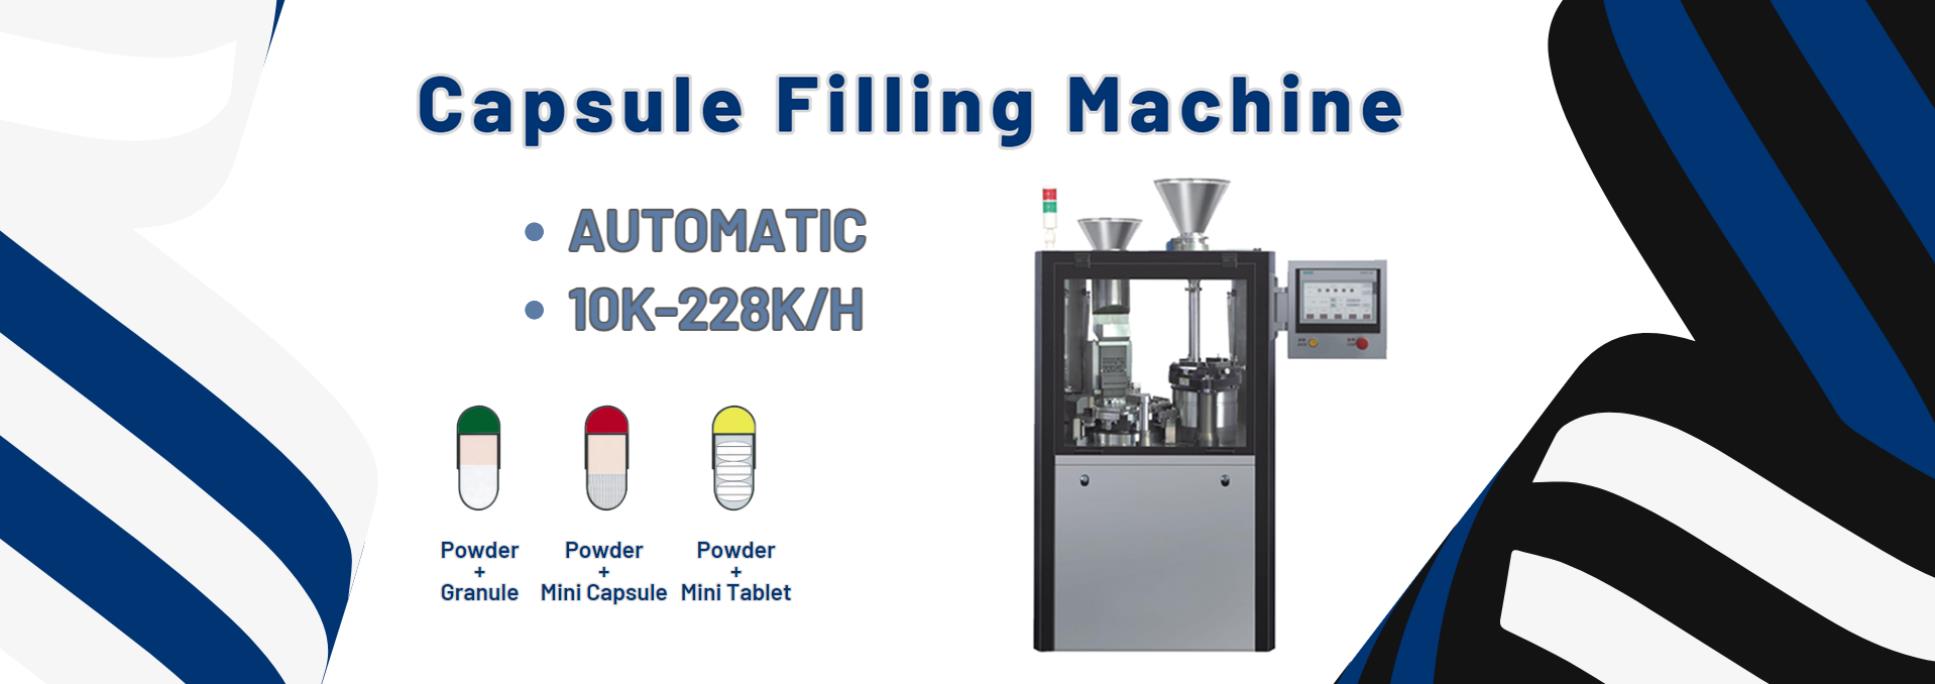 capsule-filling-machine-automatic